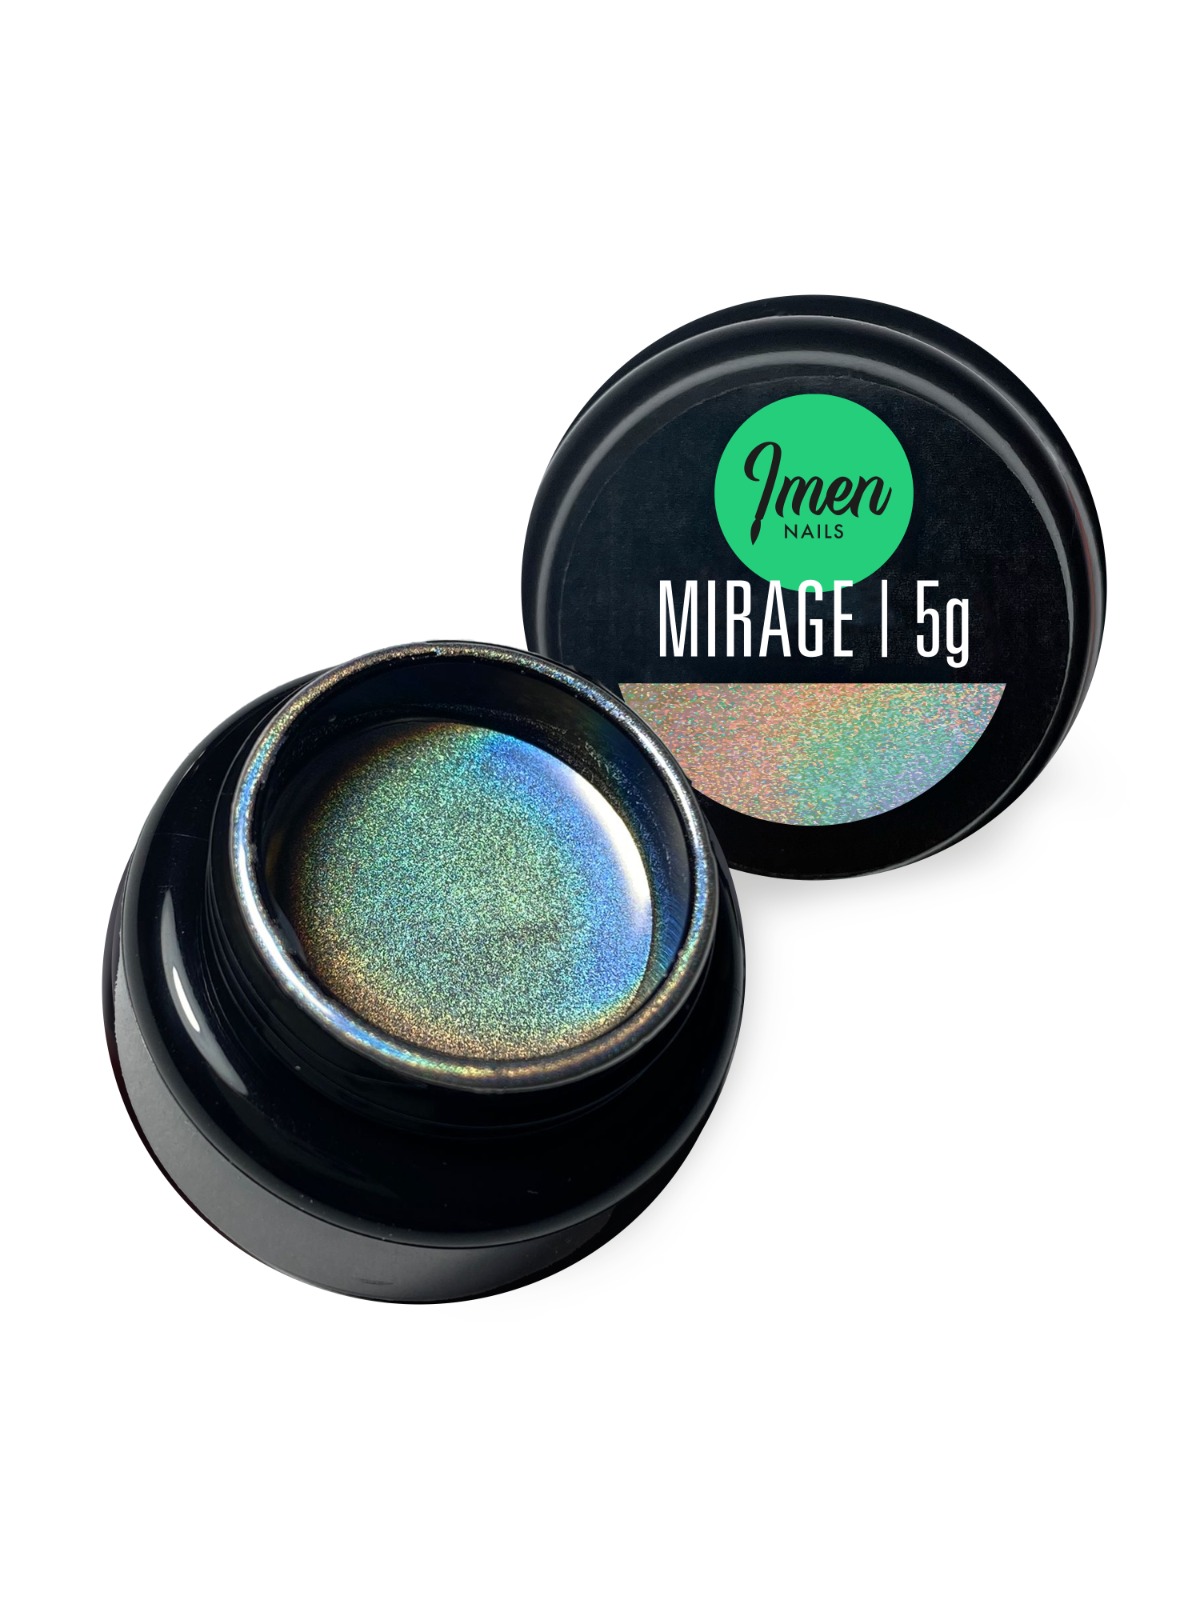 Гель краска Mirage limited edition, 5g